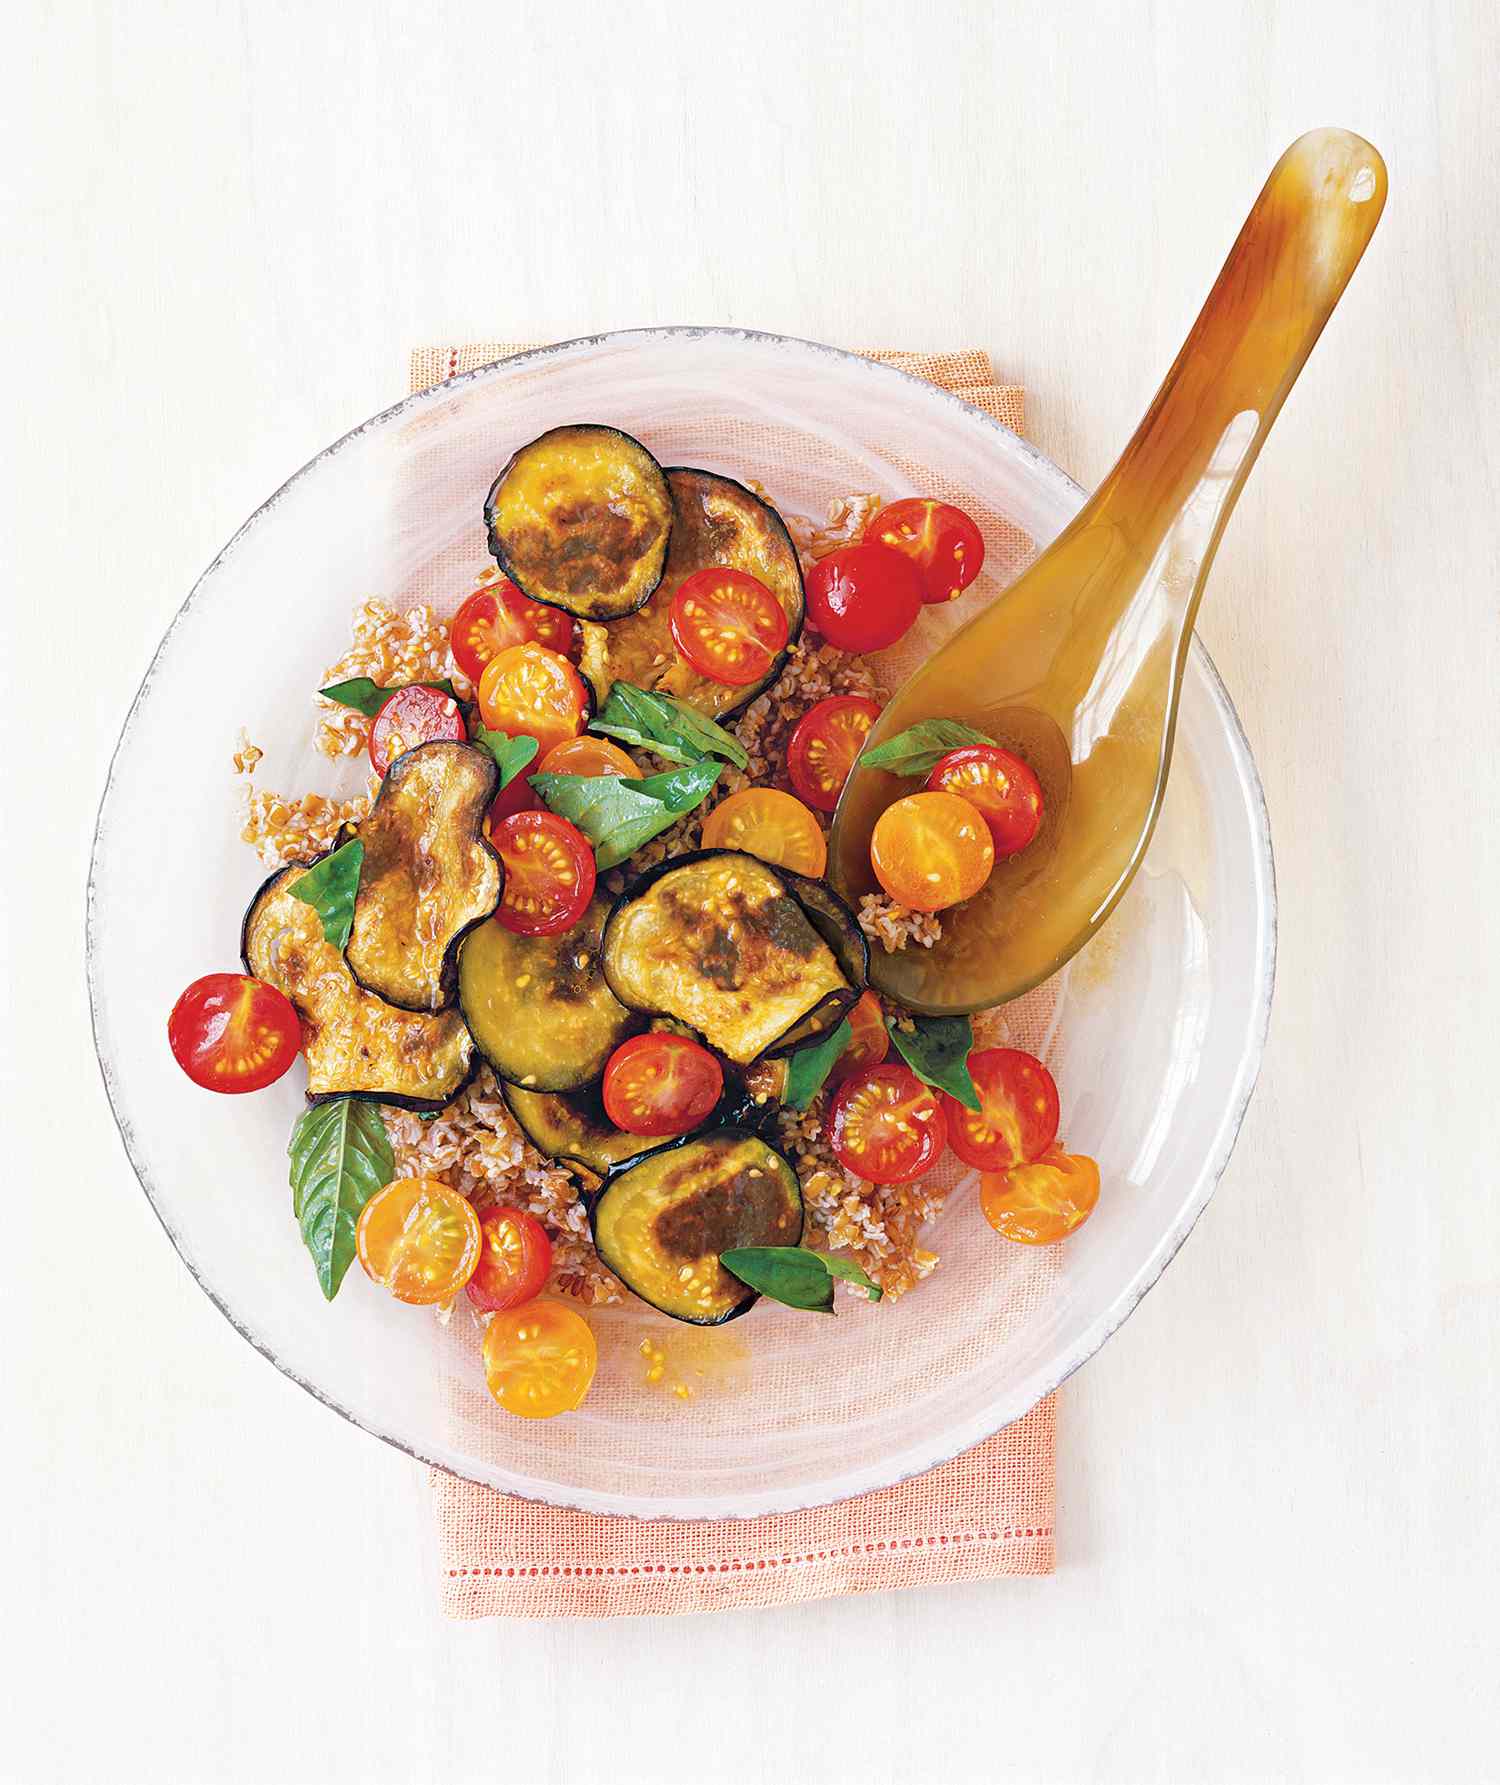 Bulgur Wheat Salad With Tomato and Eggplant